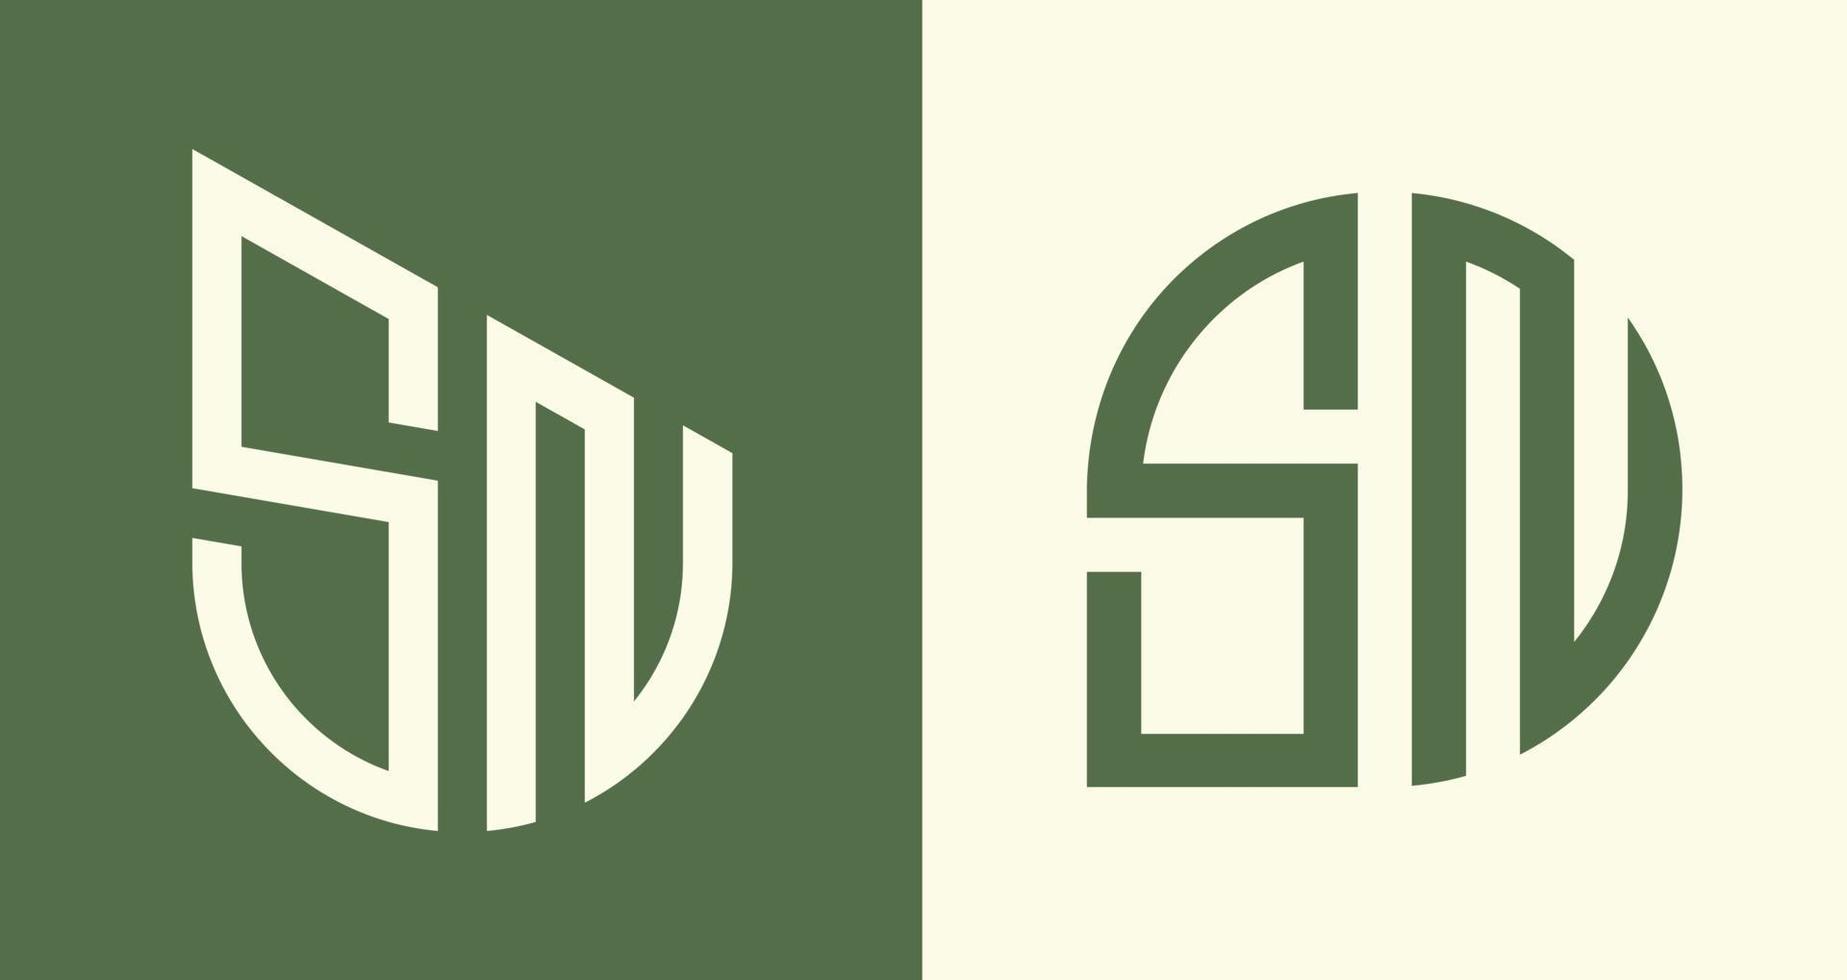 kreative einfache anfangsbuchstaben sn logo designs paket. vektor